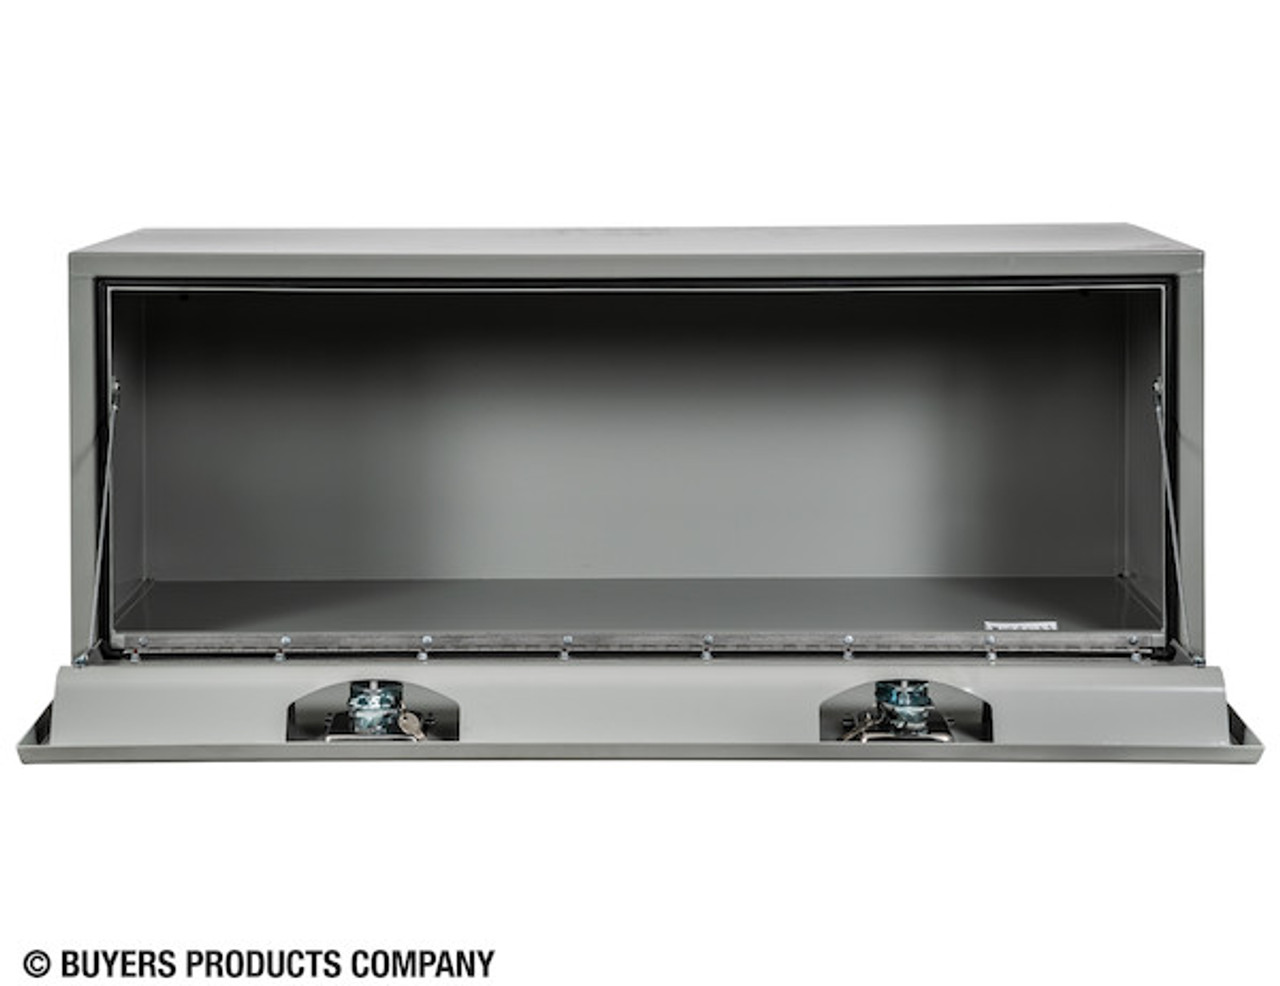 1702905 - 18x18x36 Inch Primed Steel Underbody Truck Box